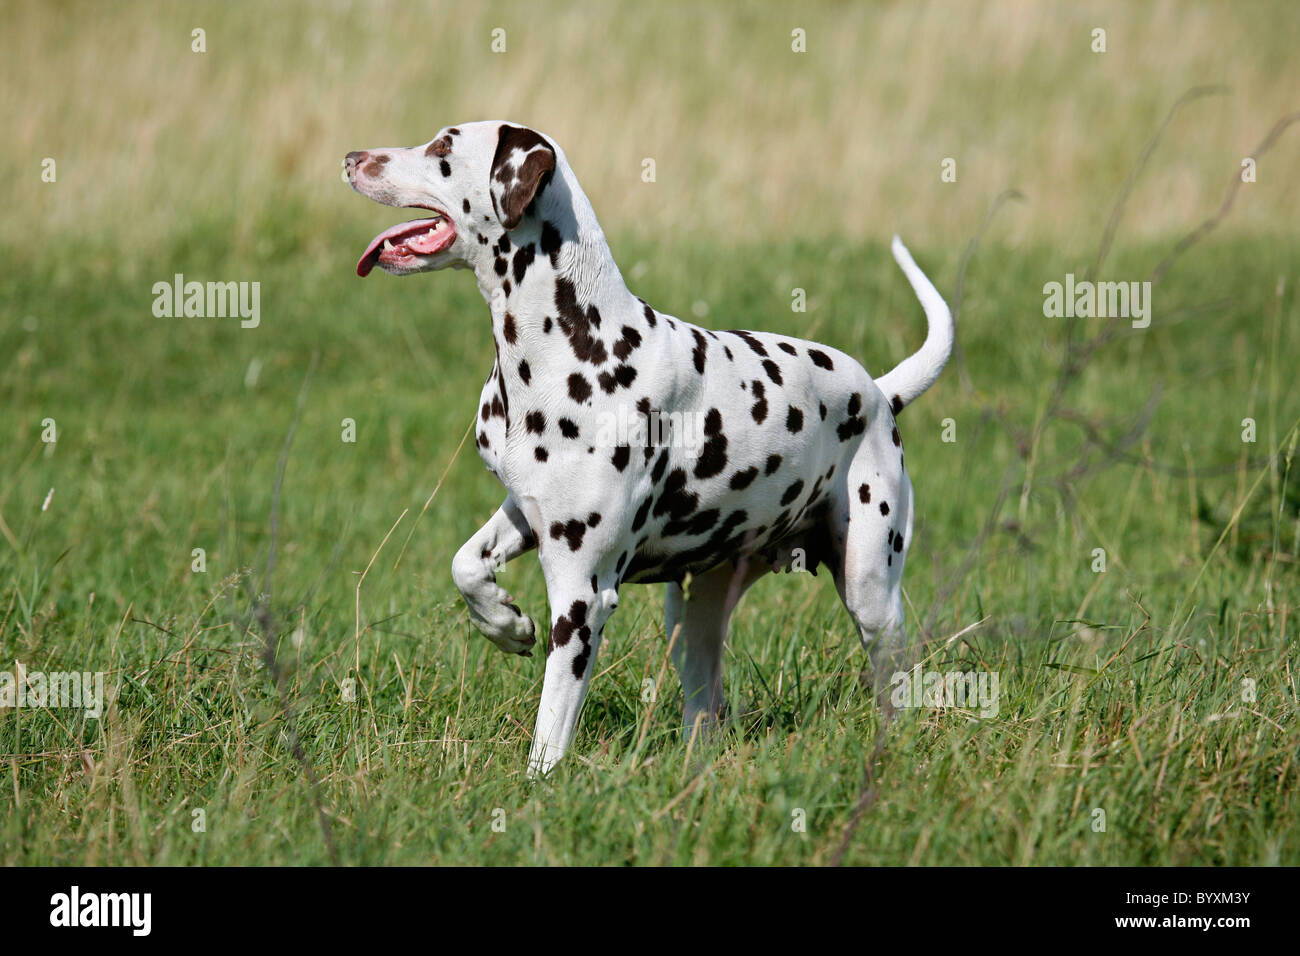 stehender Dalmatiner / standing Dalmatian Stock Photo